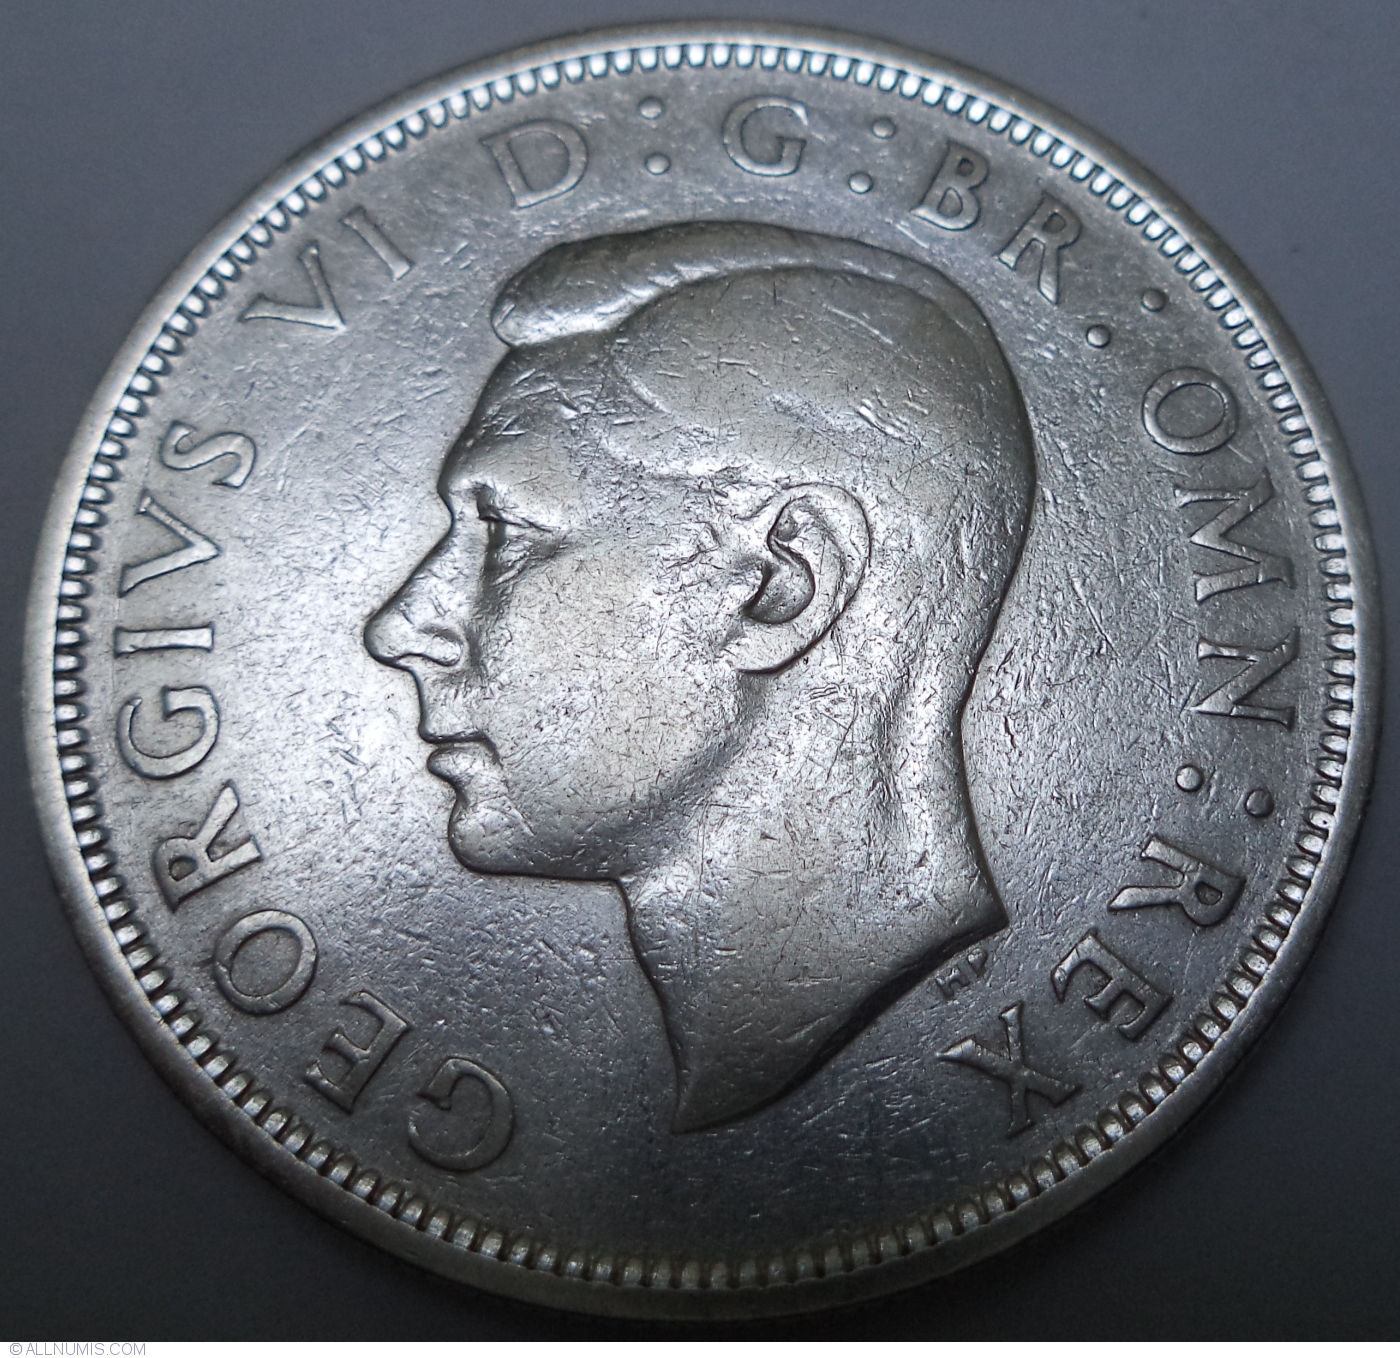 Half Crown 1937, George VI (1936-1952) - Great Britain - Coin - 41989